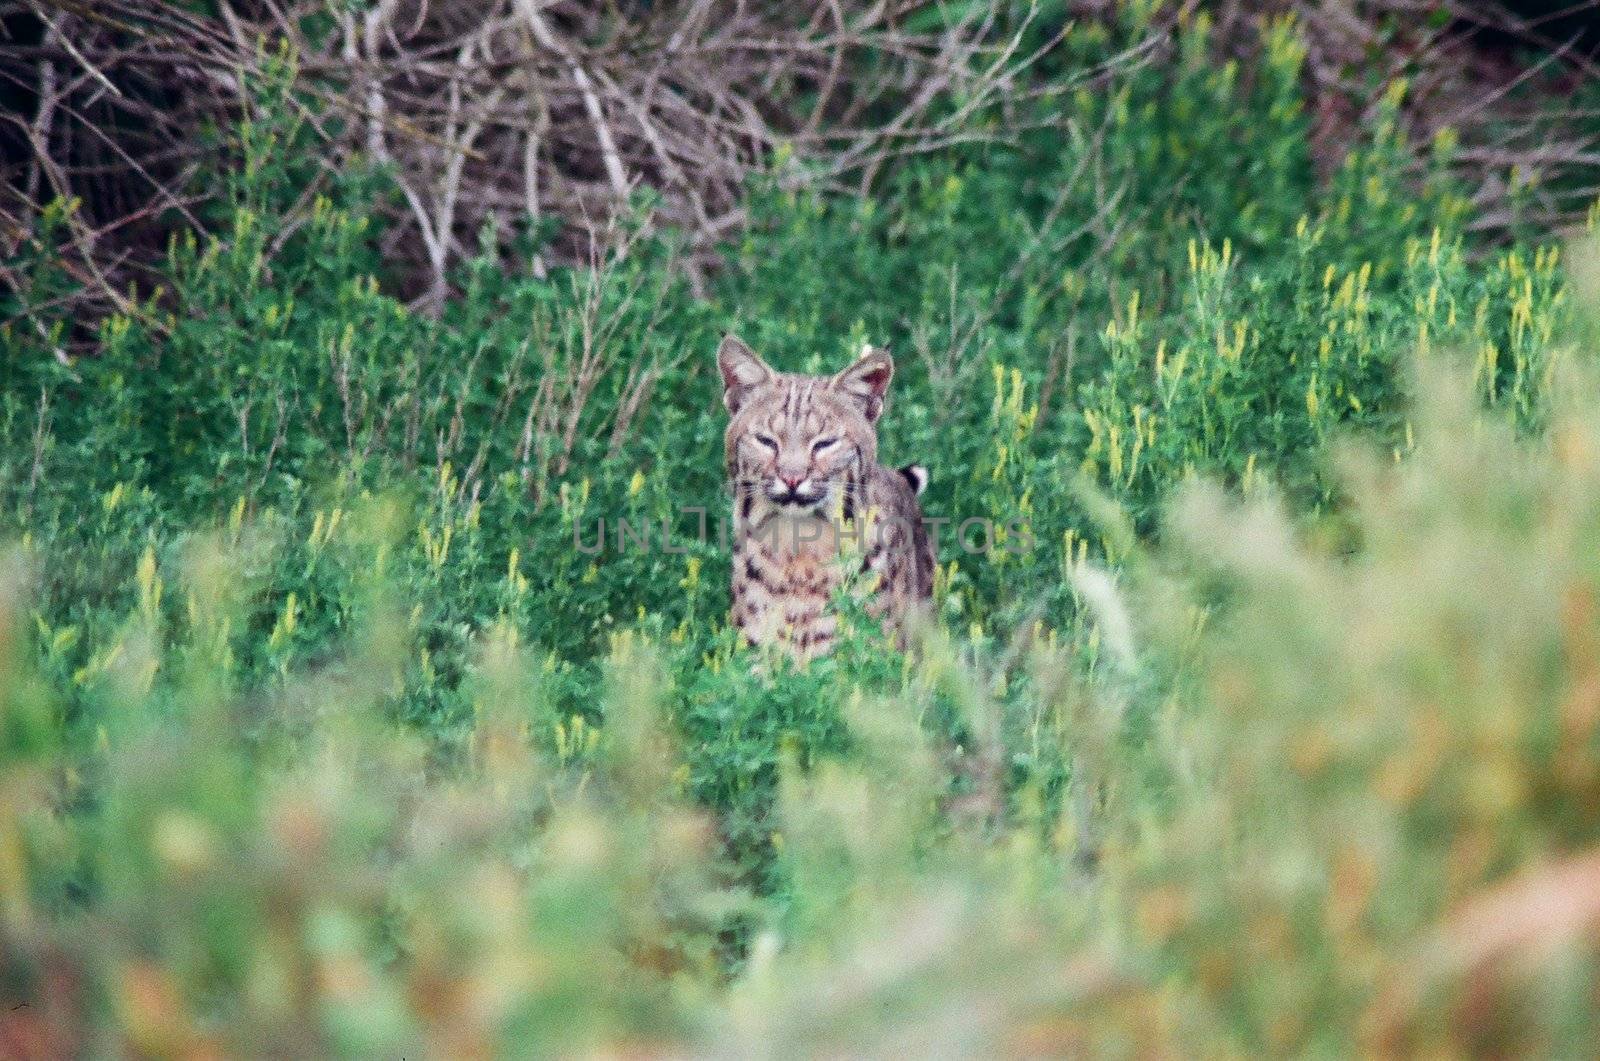 Bobcat in the wild by photosbyrob